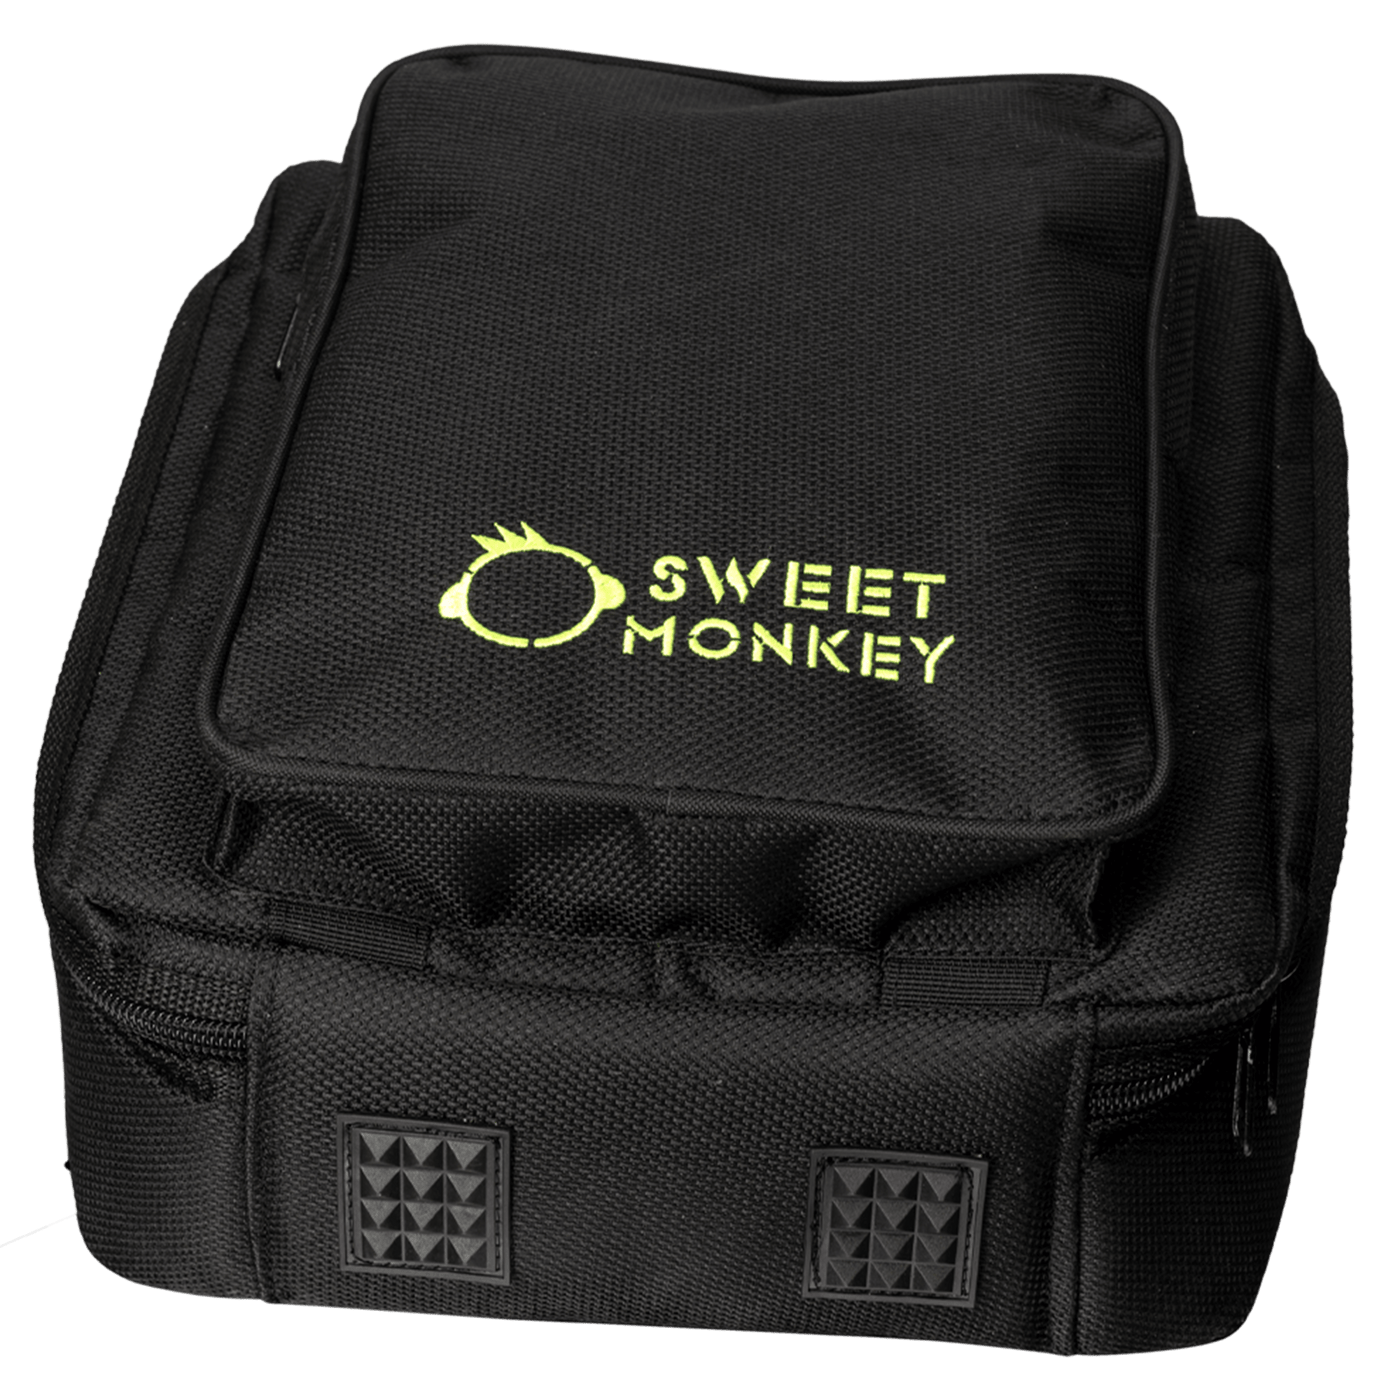 Sweet Monkey Softbag 2x3 para Pedalboard y Multiuso